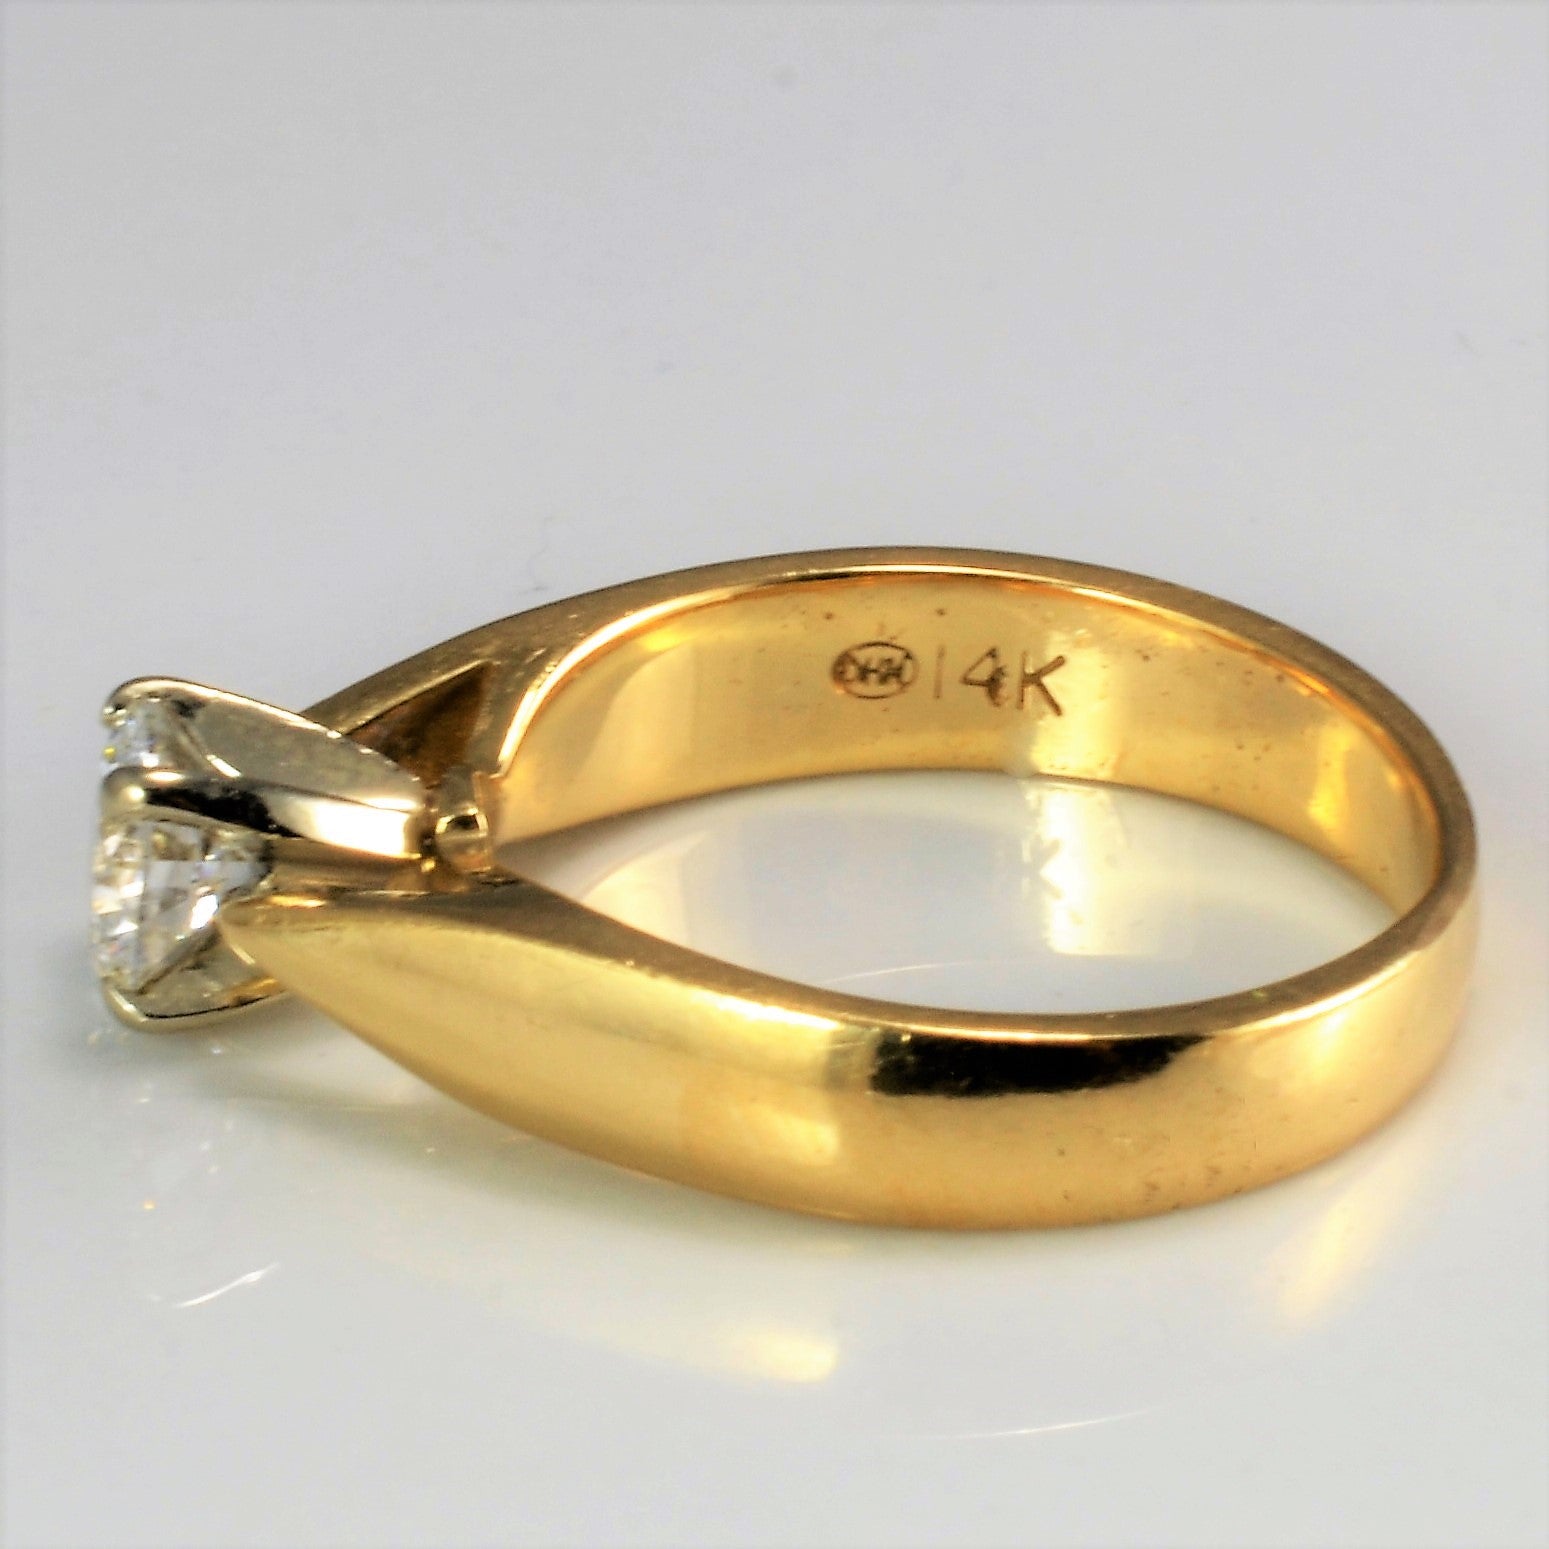 Solitaire Diamond Engagement Ring | 0.52 ct, SZ 5 |